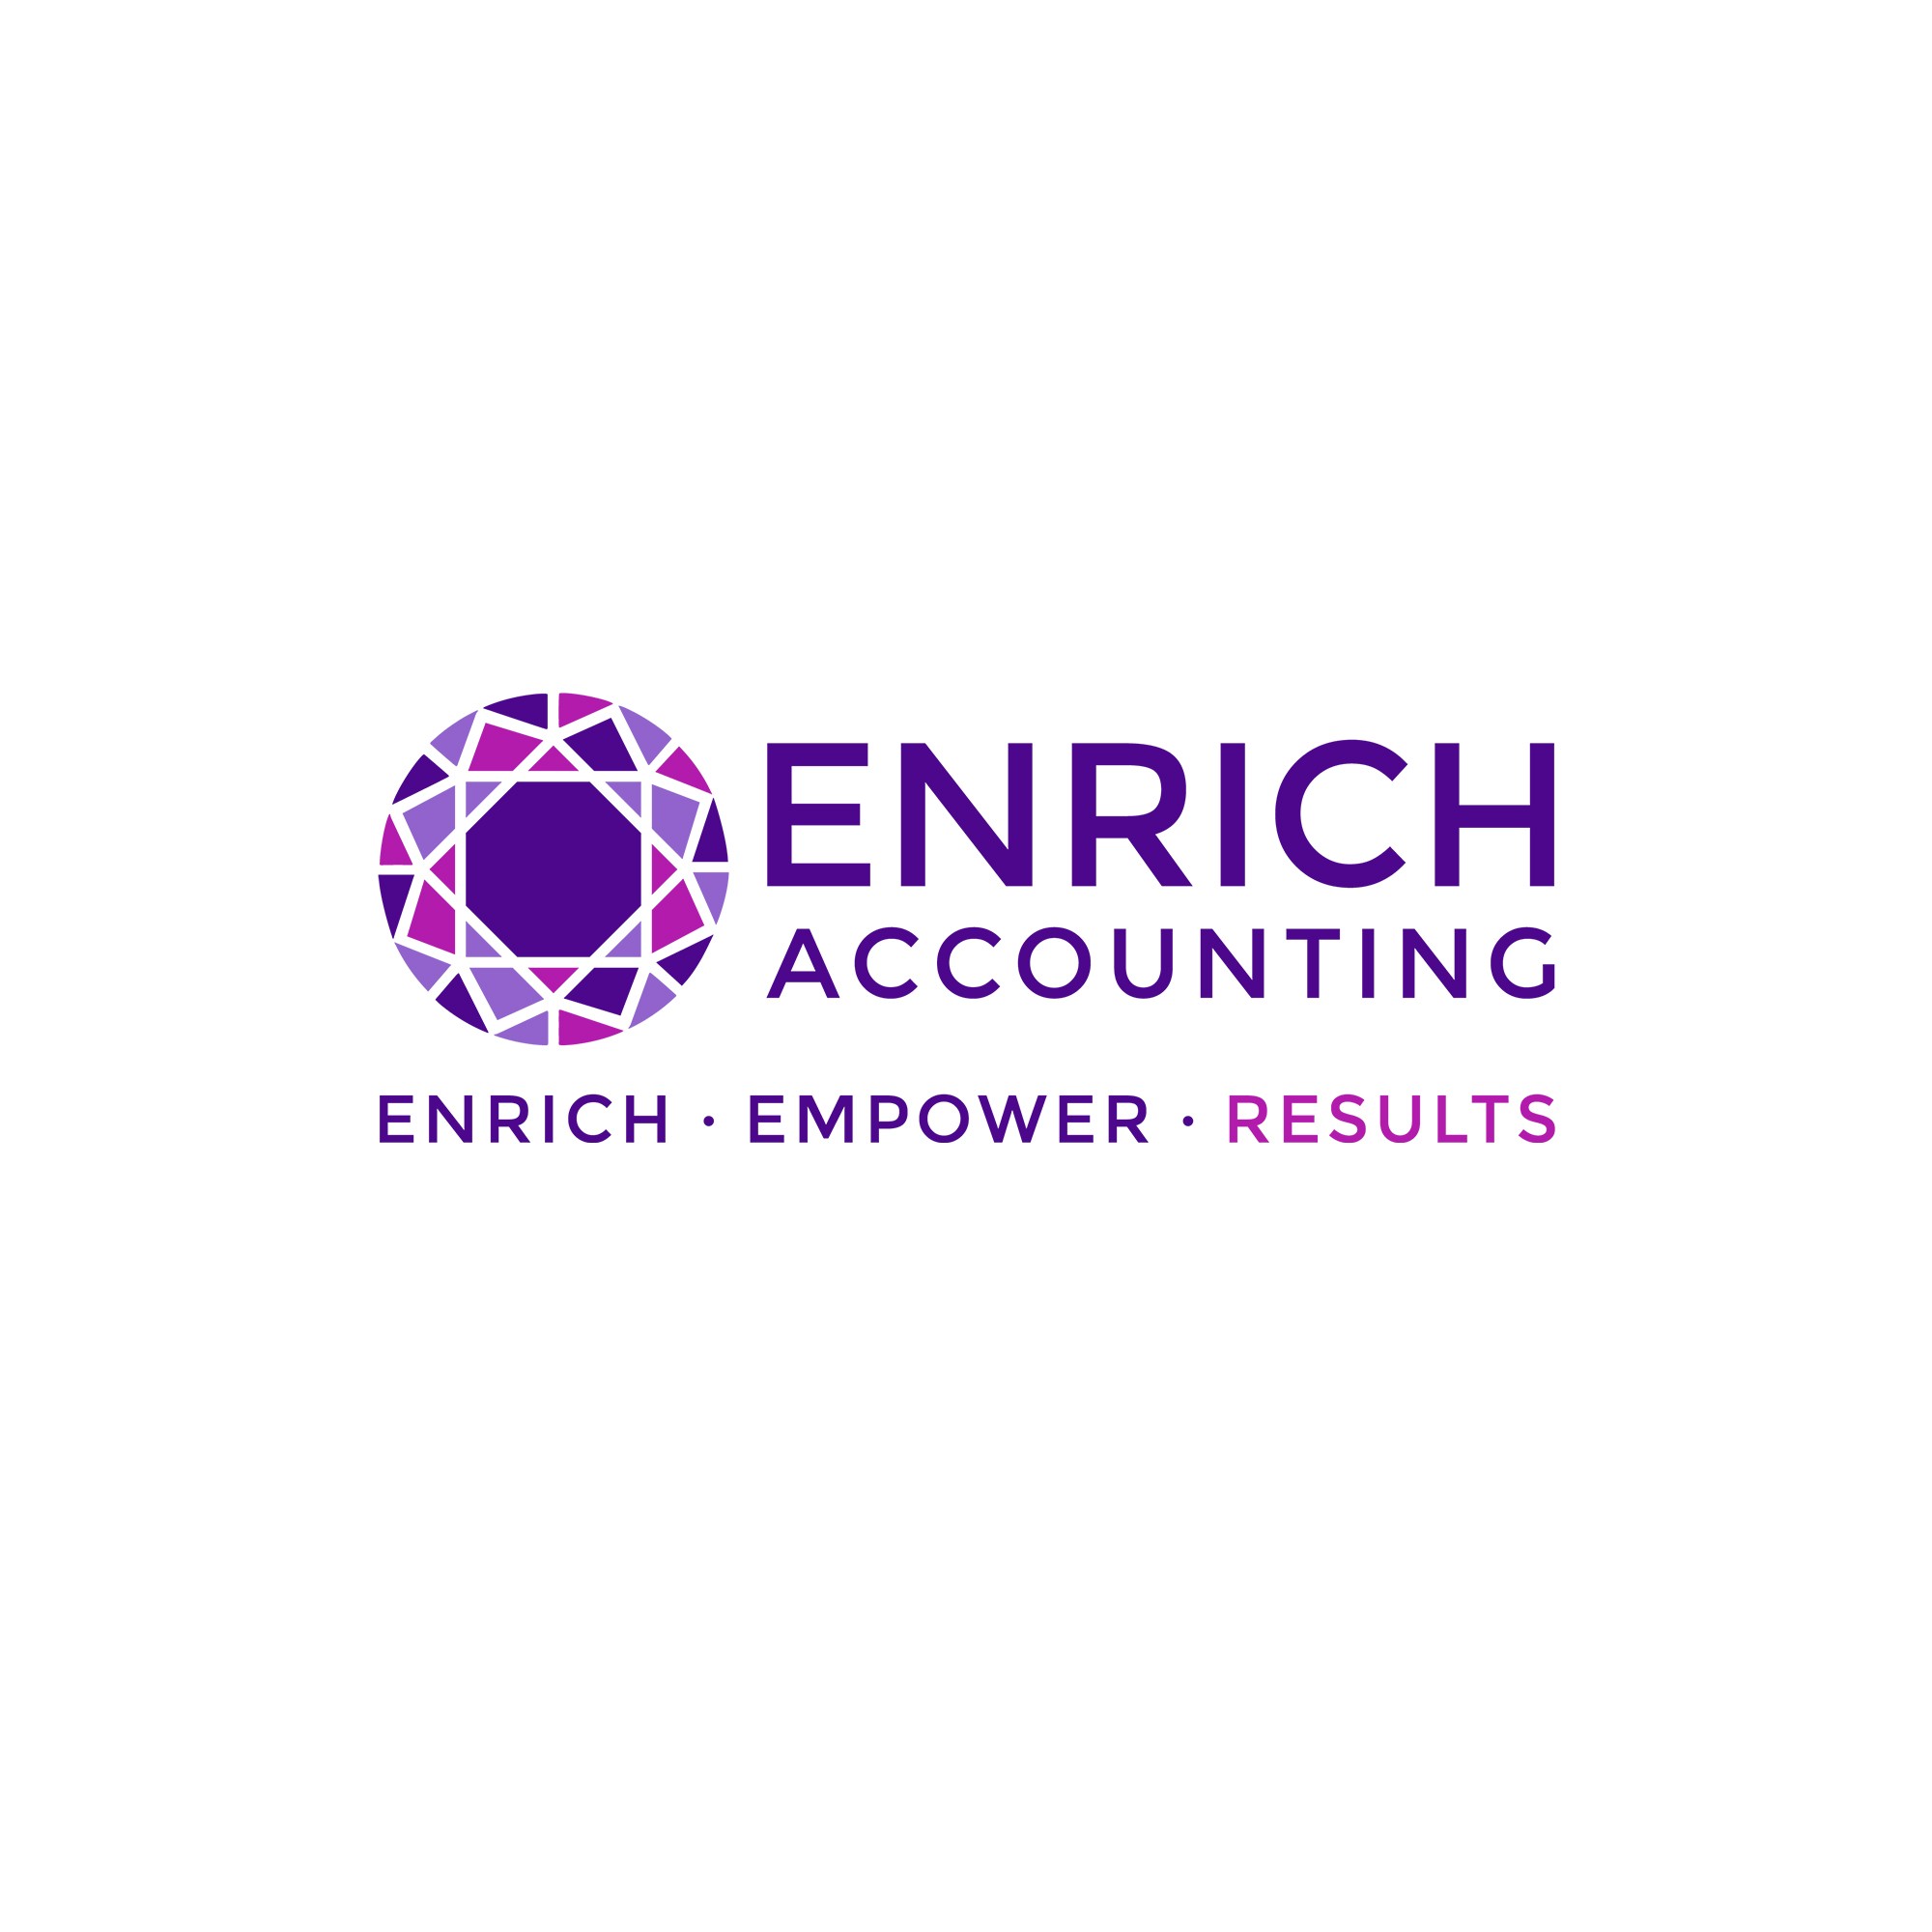 enrich accounting logo branding